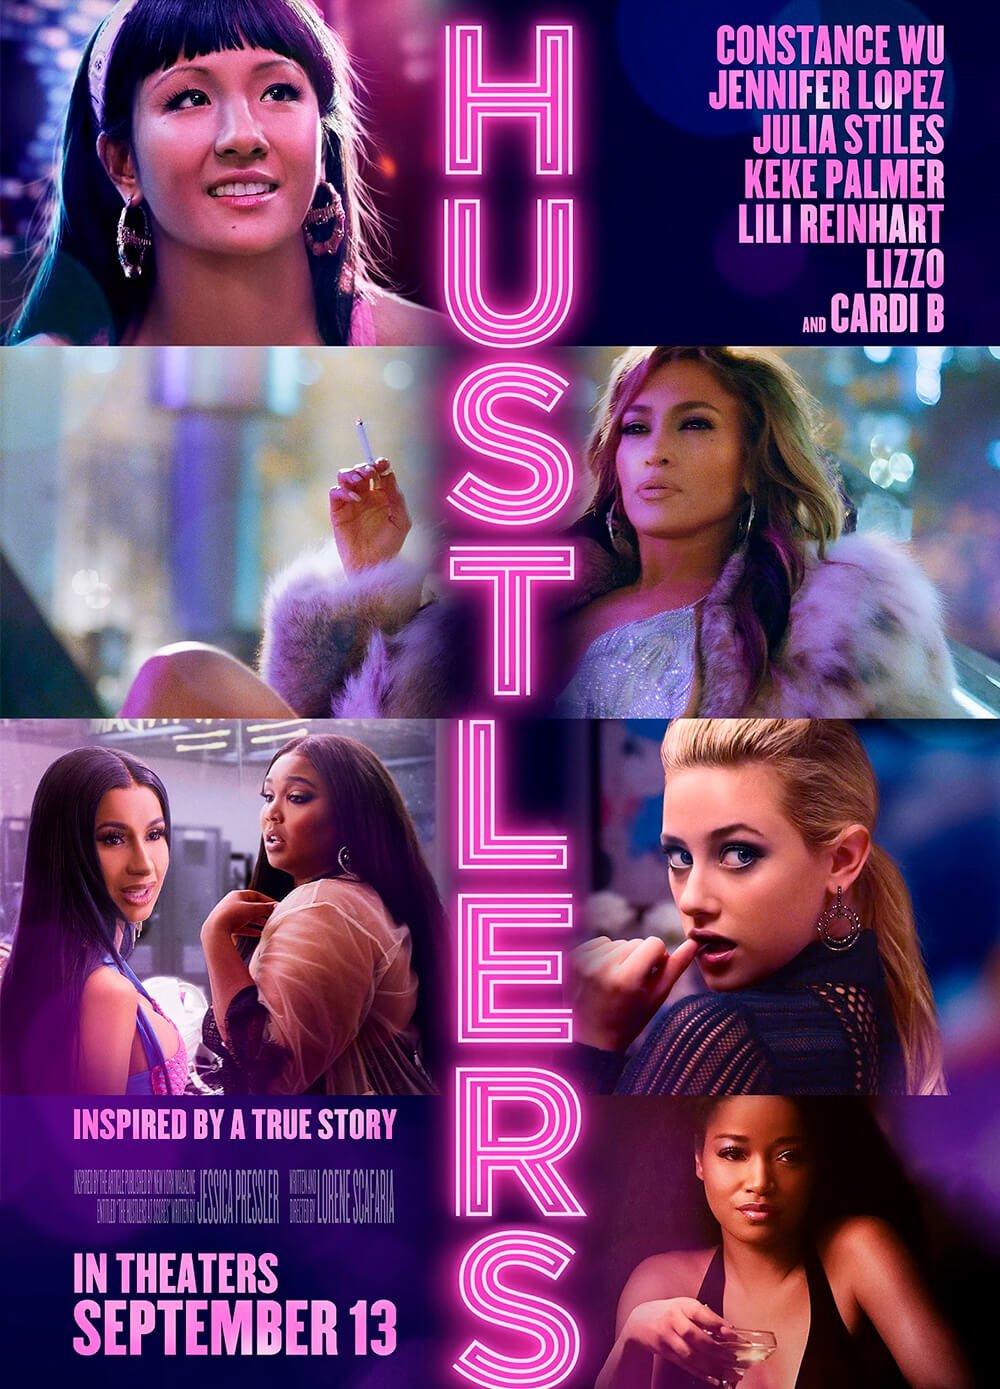 It girls - filmes da Jennifer Lopez, hustlers, as golpistas - filmes da Jennifer Lopez - Inverno - Street Style  - https://stealthelook.com.br